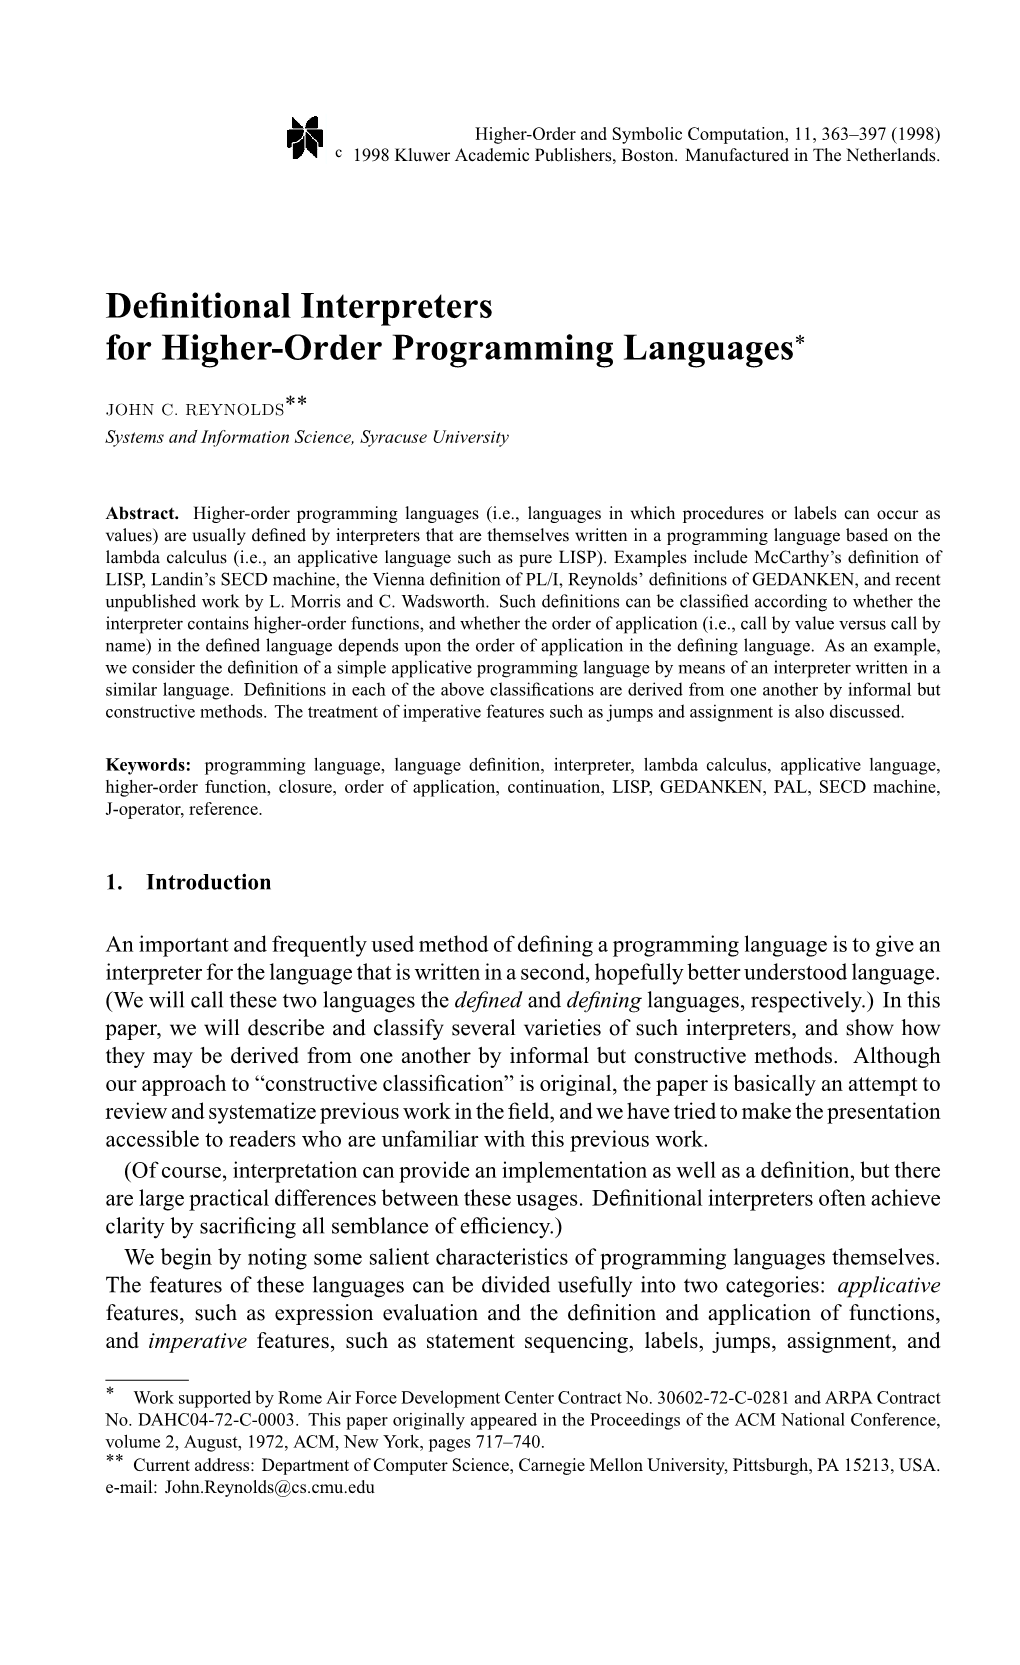 Definitional Interpreters for Higher-Order Programming